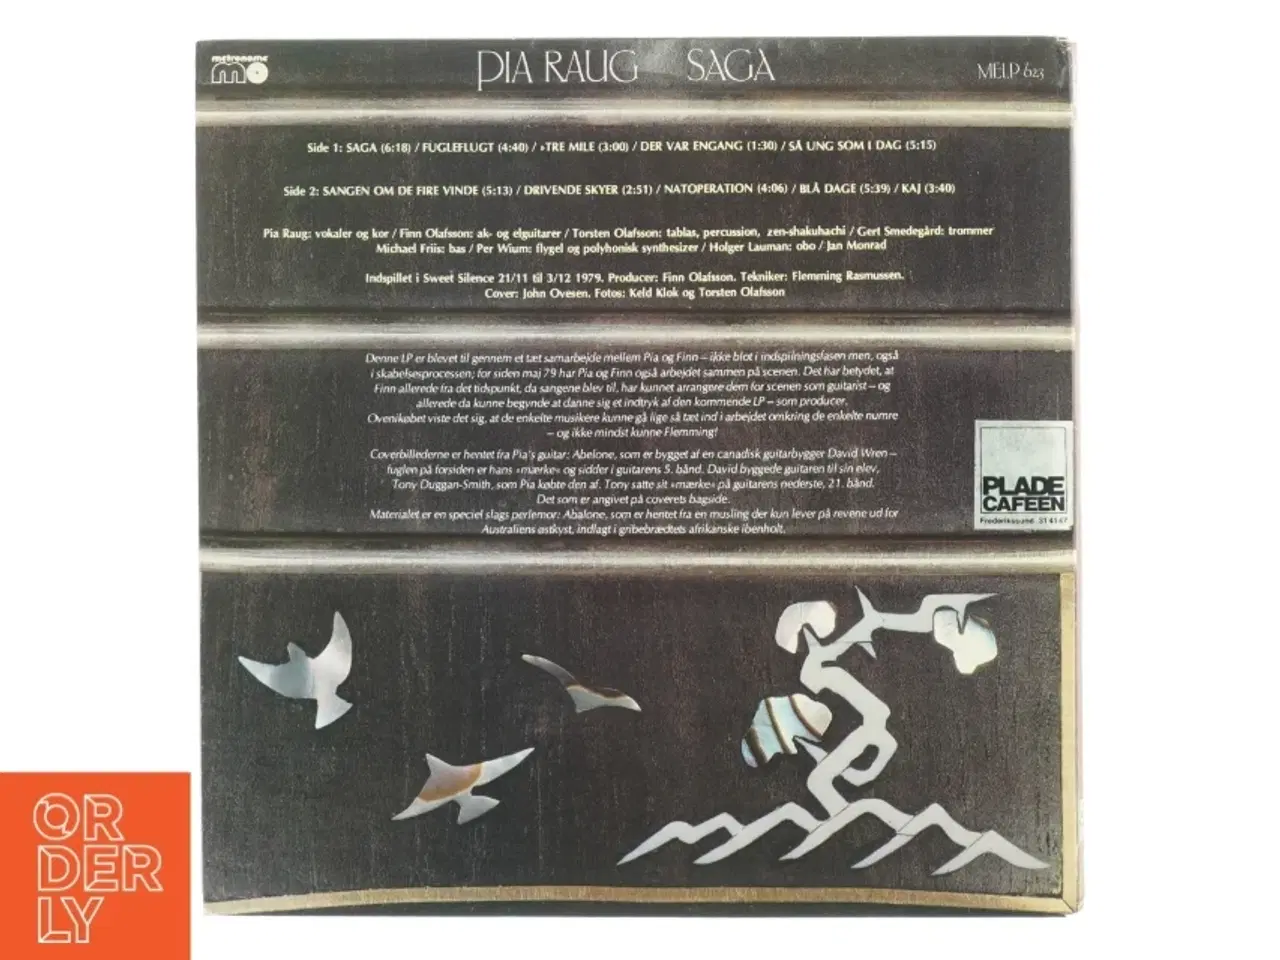 Billede 2 - Pia Raug - Saga Vinylplade fra Medley Records (str. 31 x 31 cm)